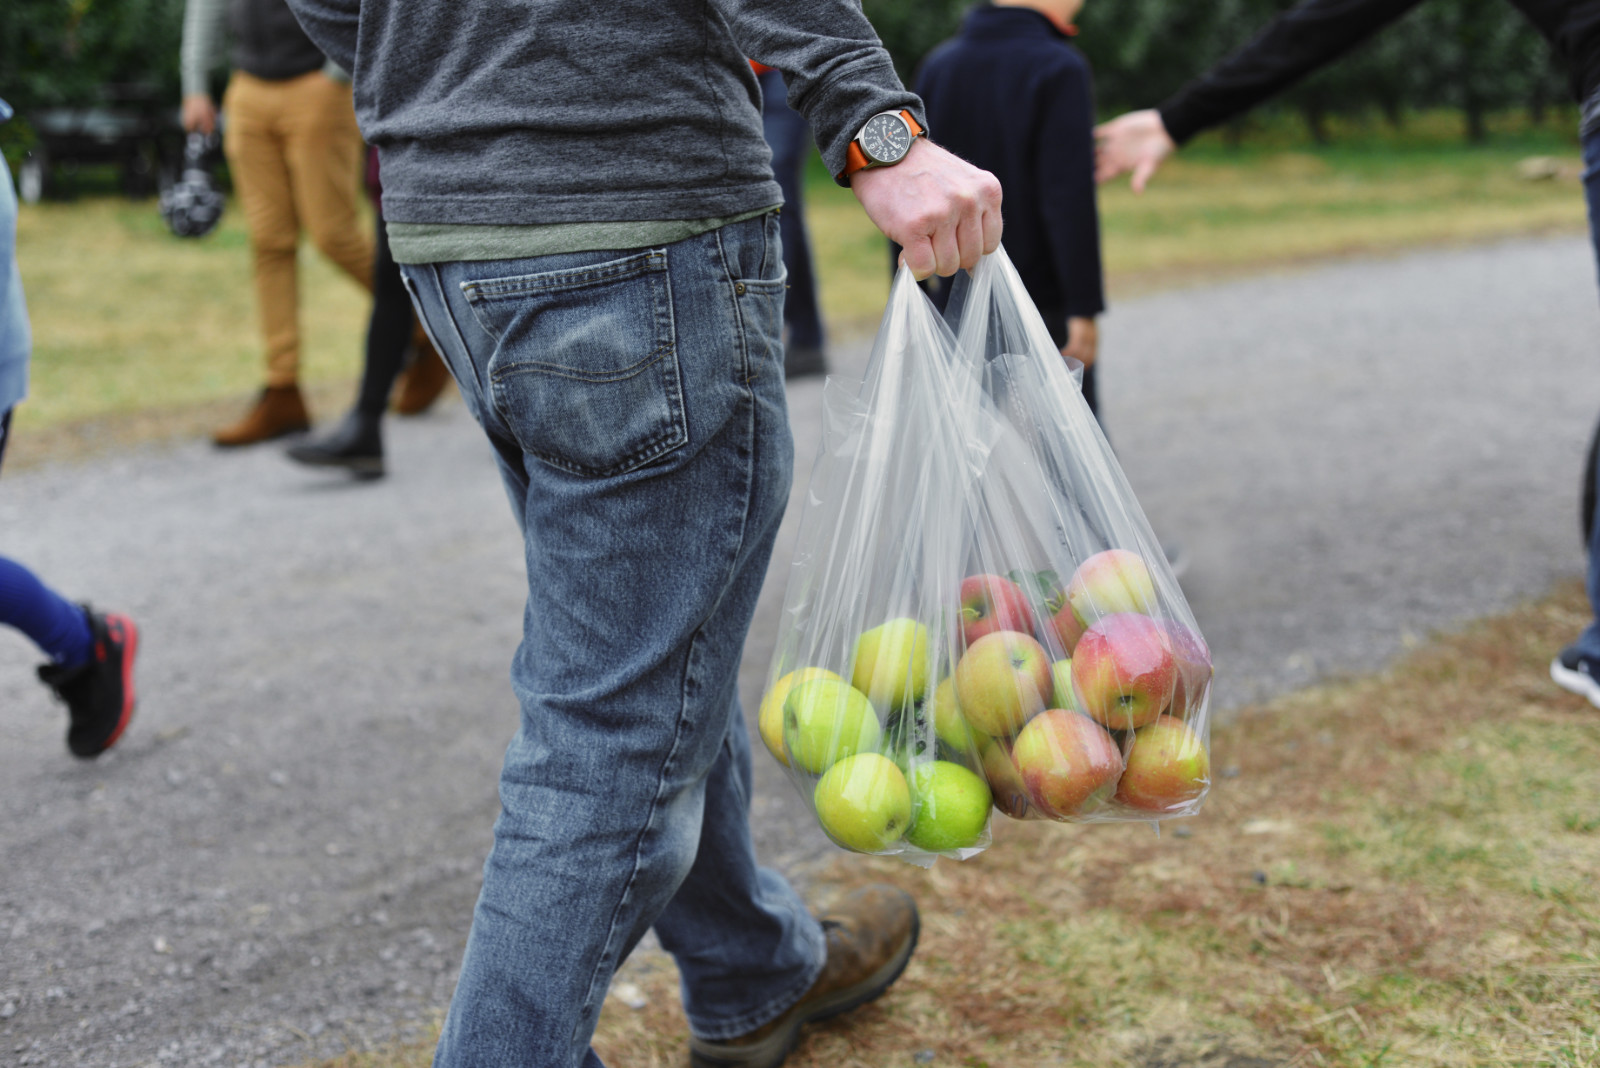 Carrying bag of freshly picked apples